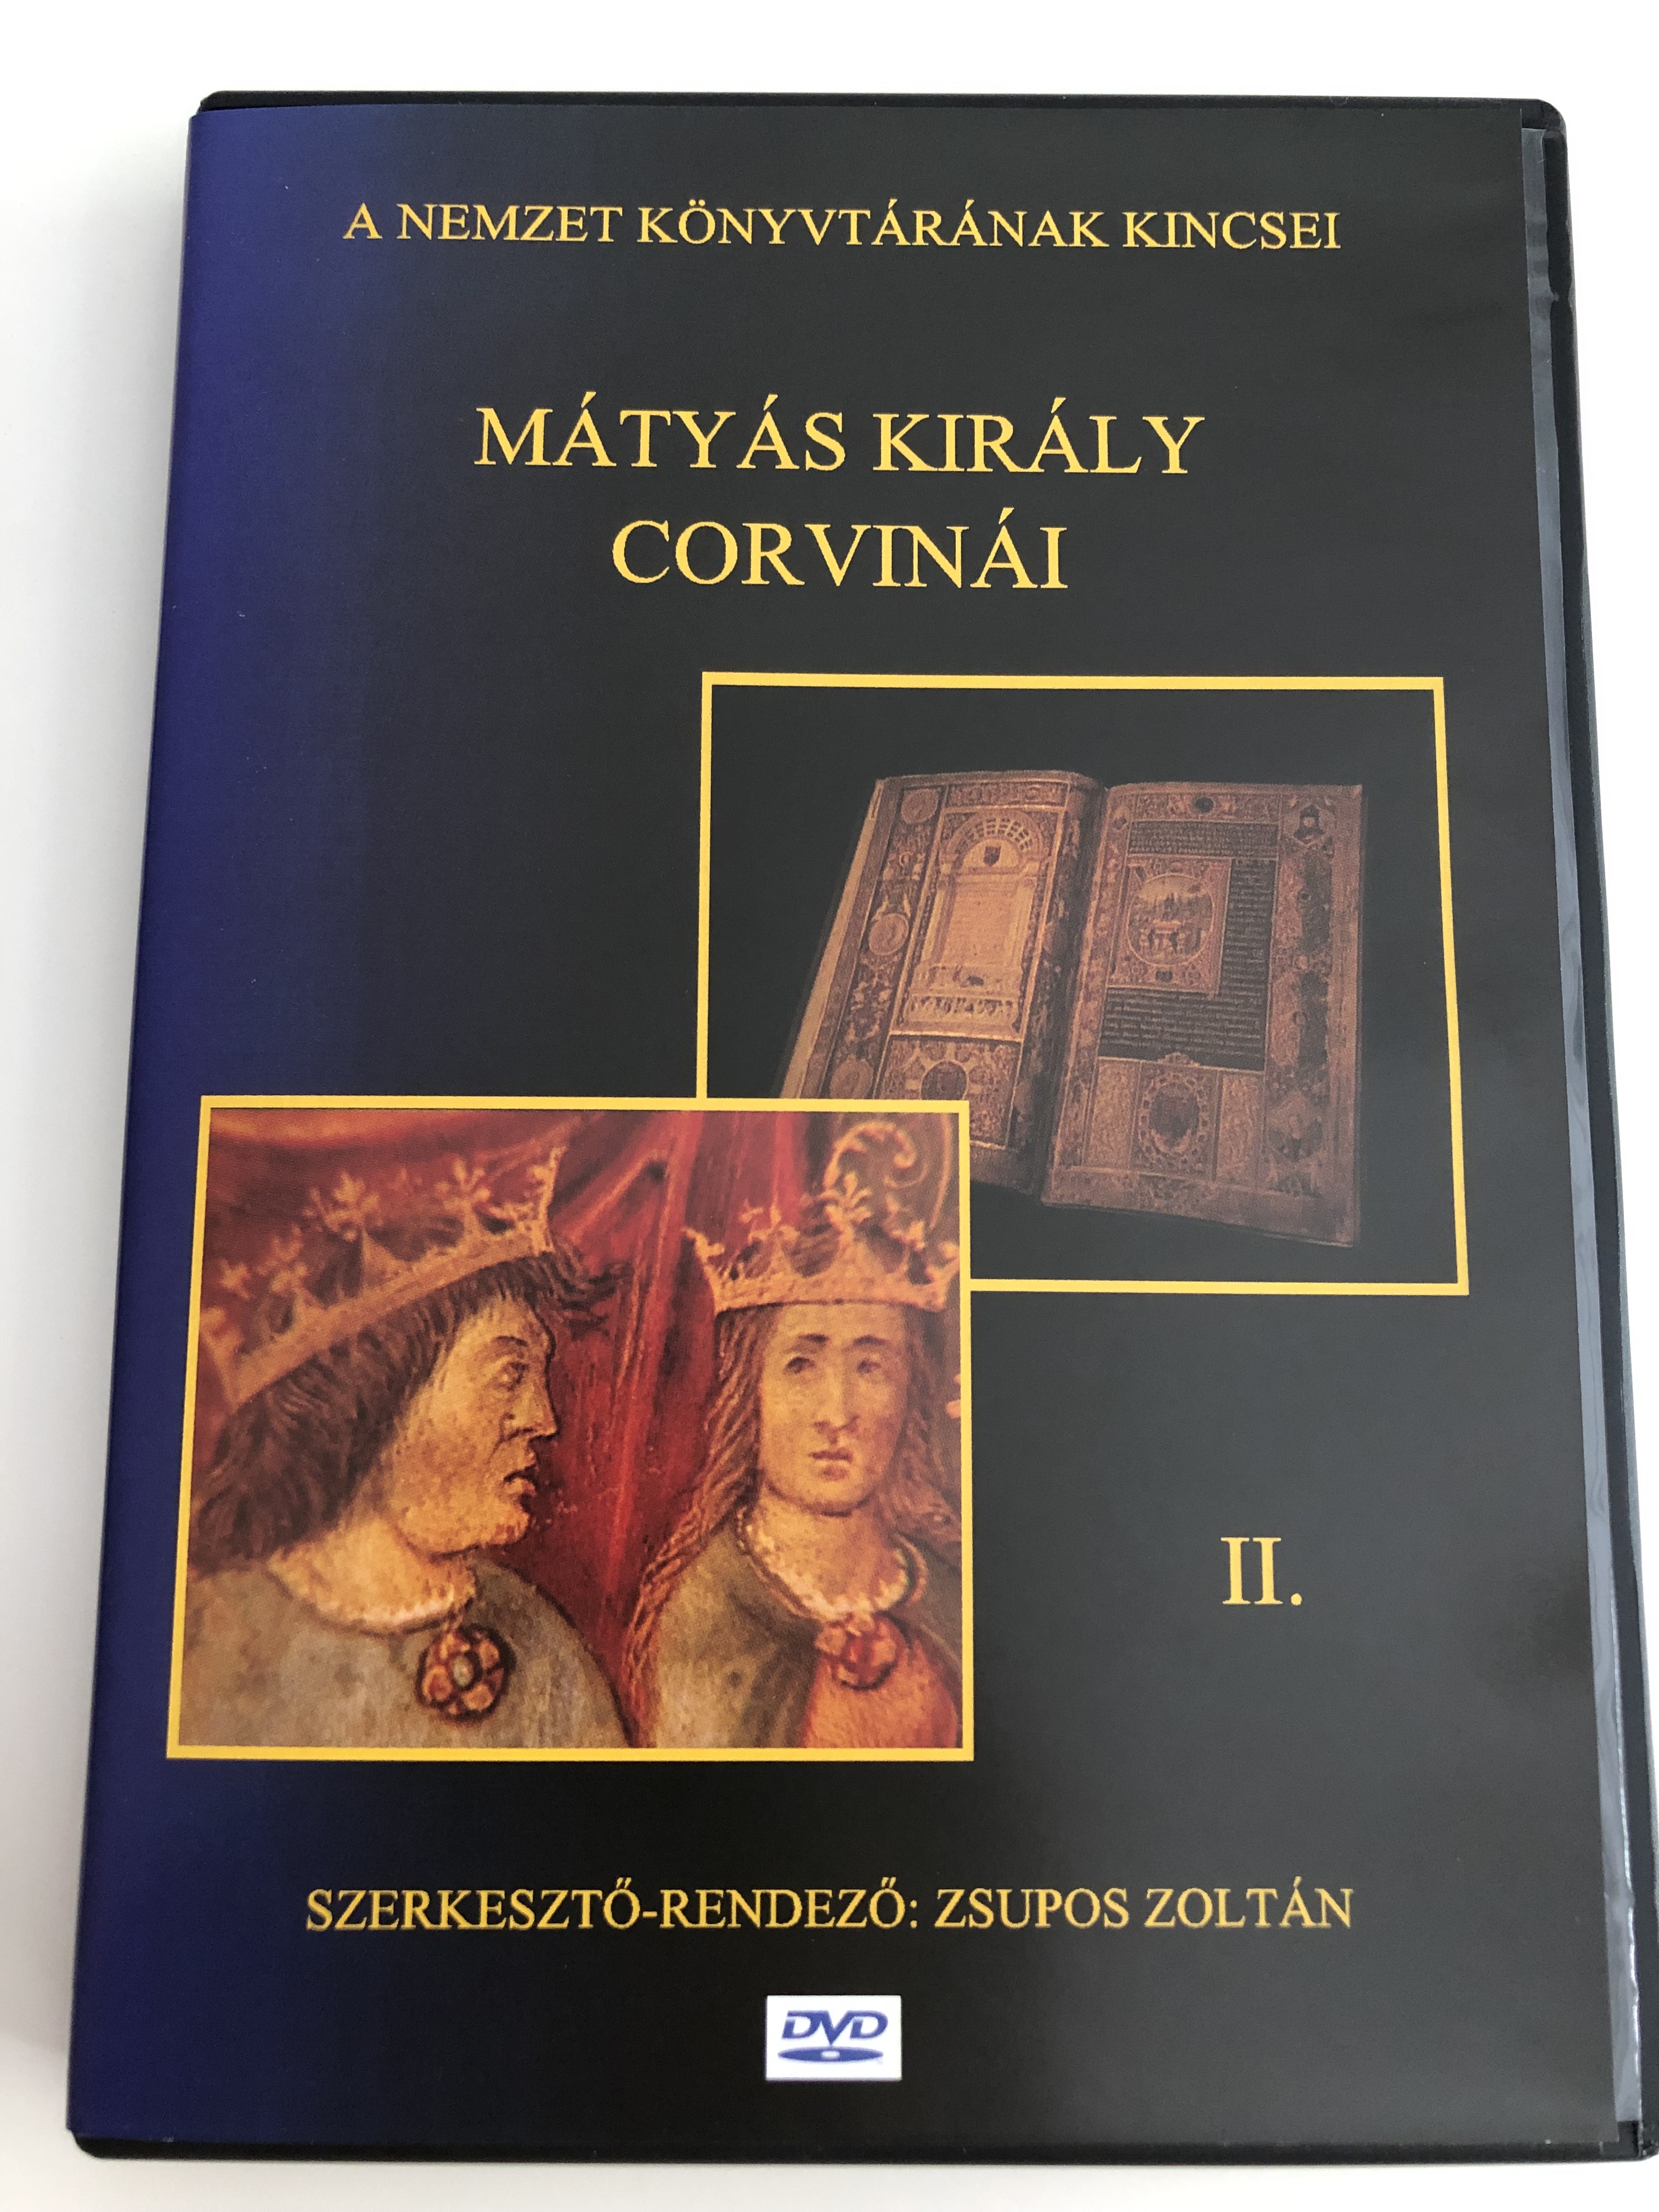 m-ty-s-kir-ly-corvin-i-ii.-dvd-a-nemzet-k-nyvt-r-nak-kincsei-directed-by-zsupos-zolt-n-hungarian-king-matthias-bibliotheca-corviniana-1-.jpg